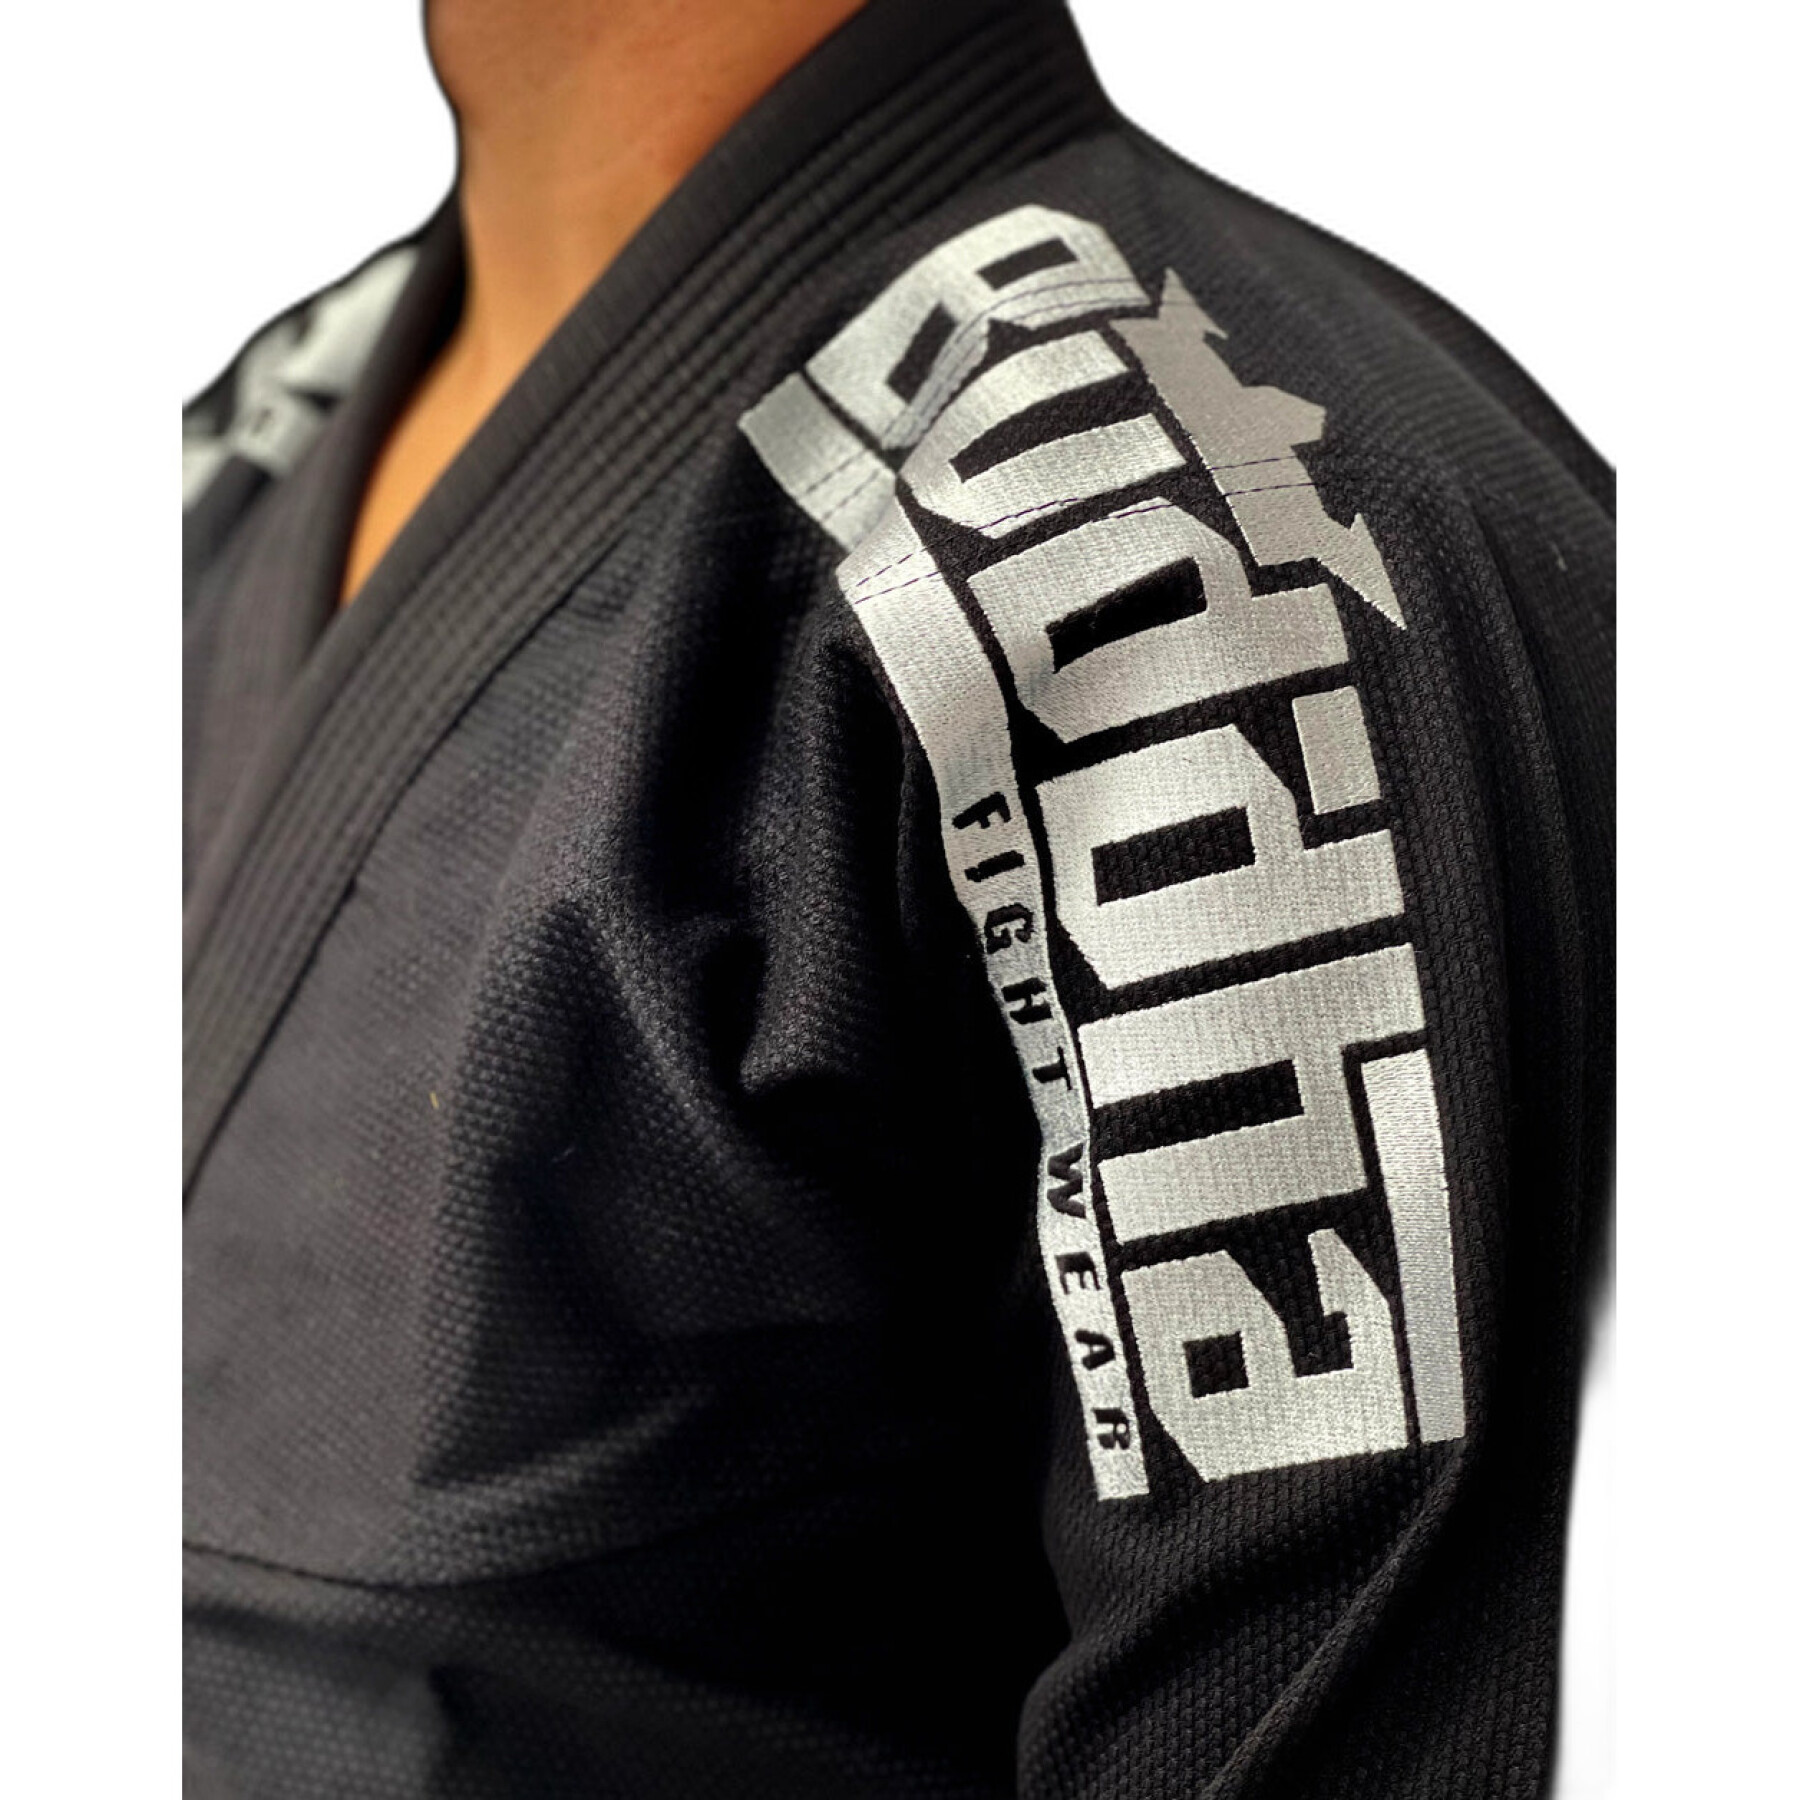 Kimono Jiu-jitsu Buddha Fight Wear Deluxe 3.0